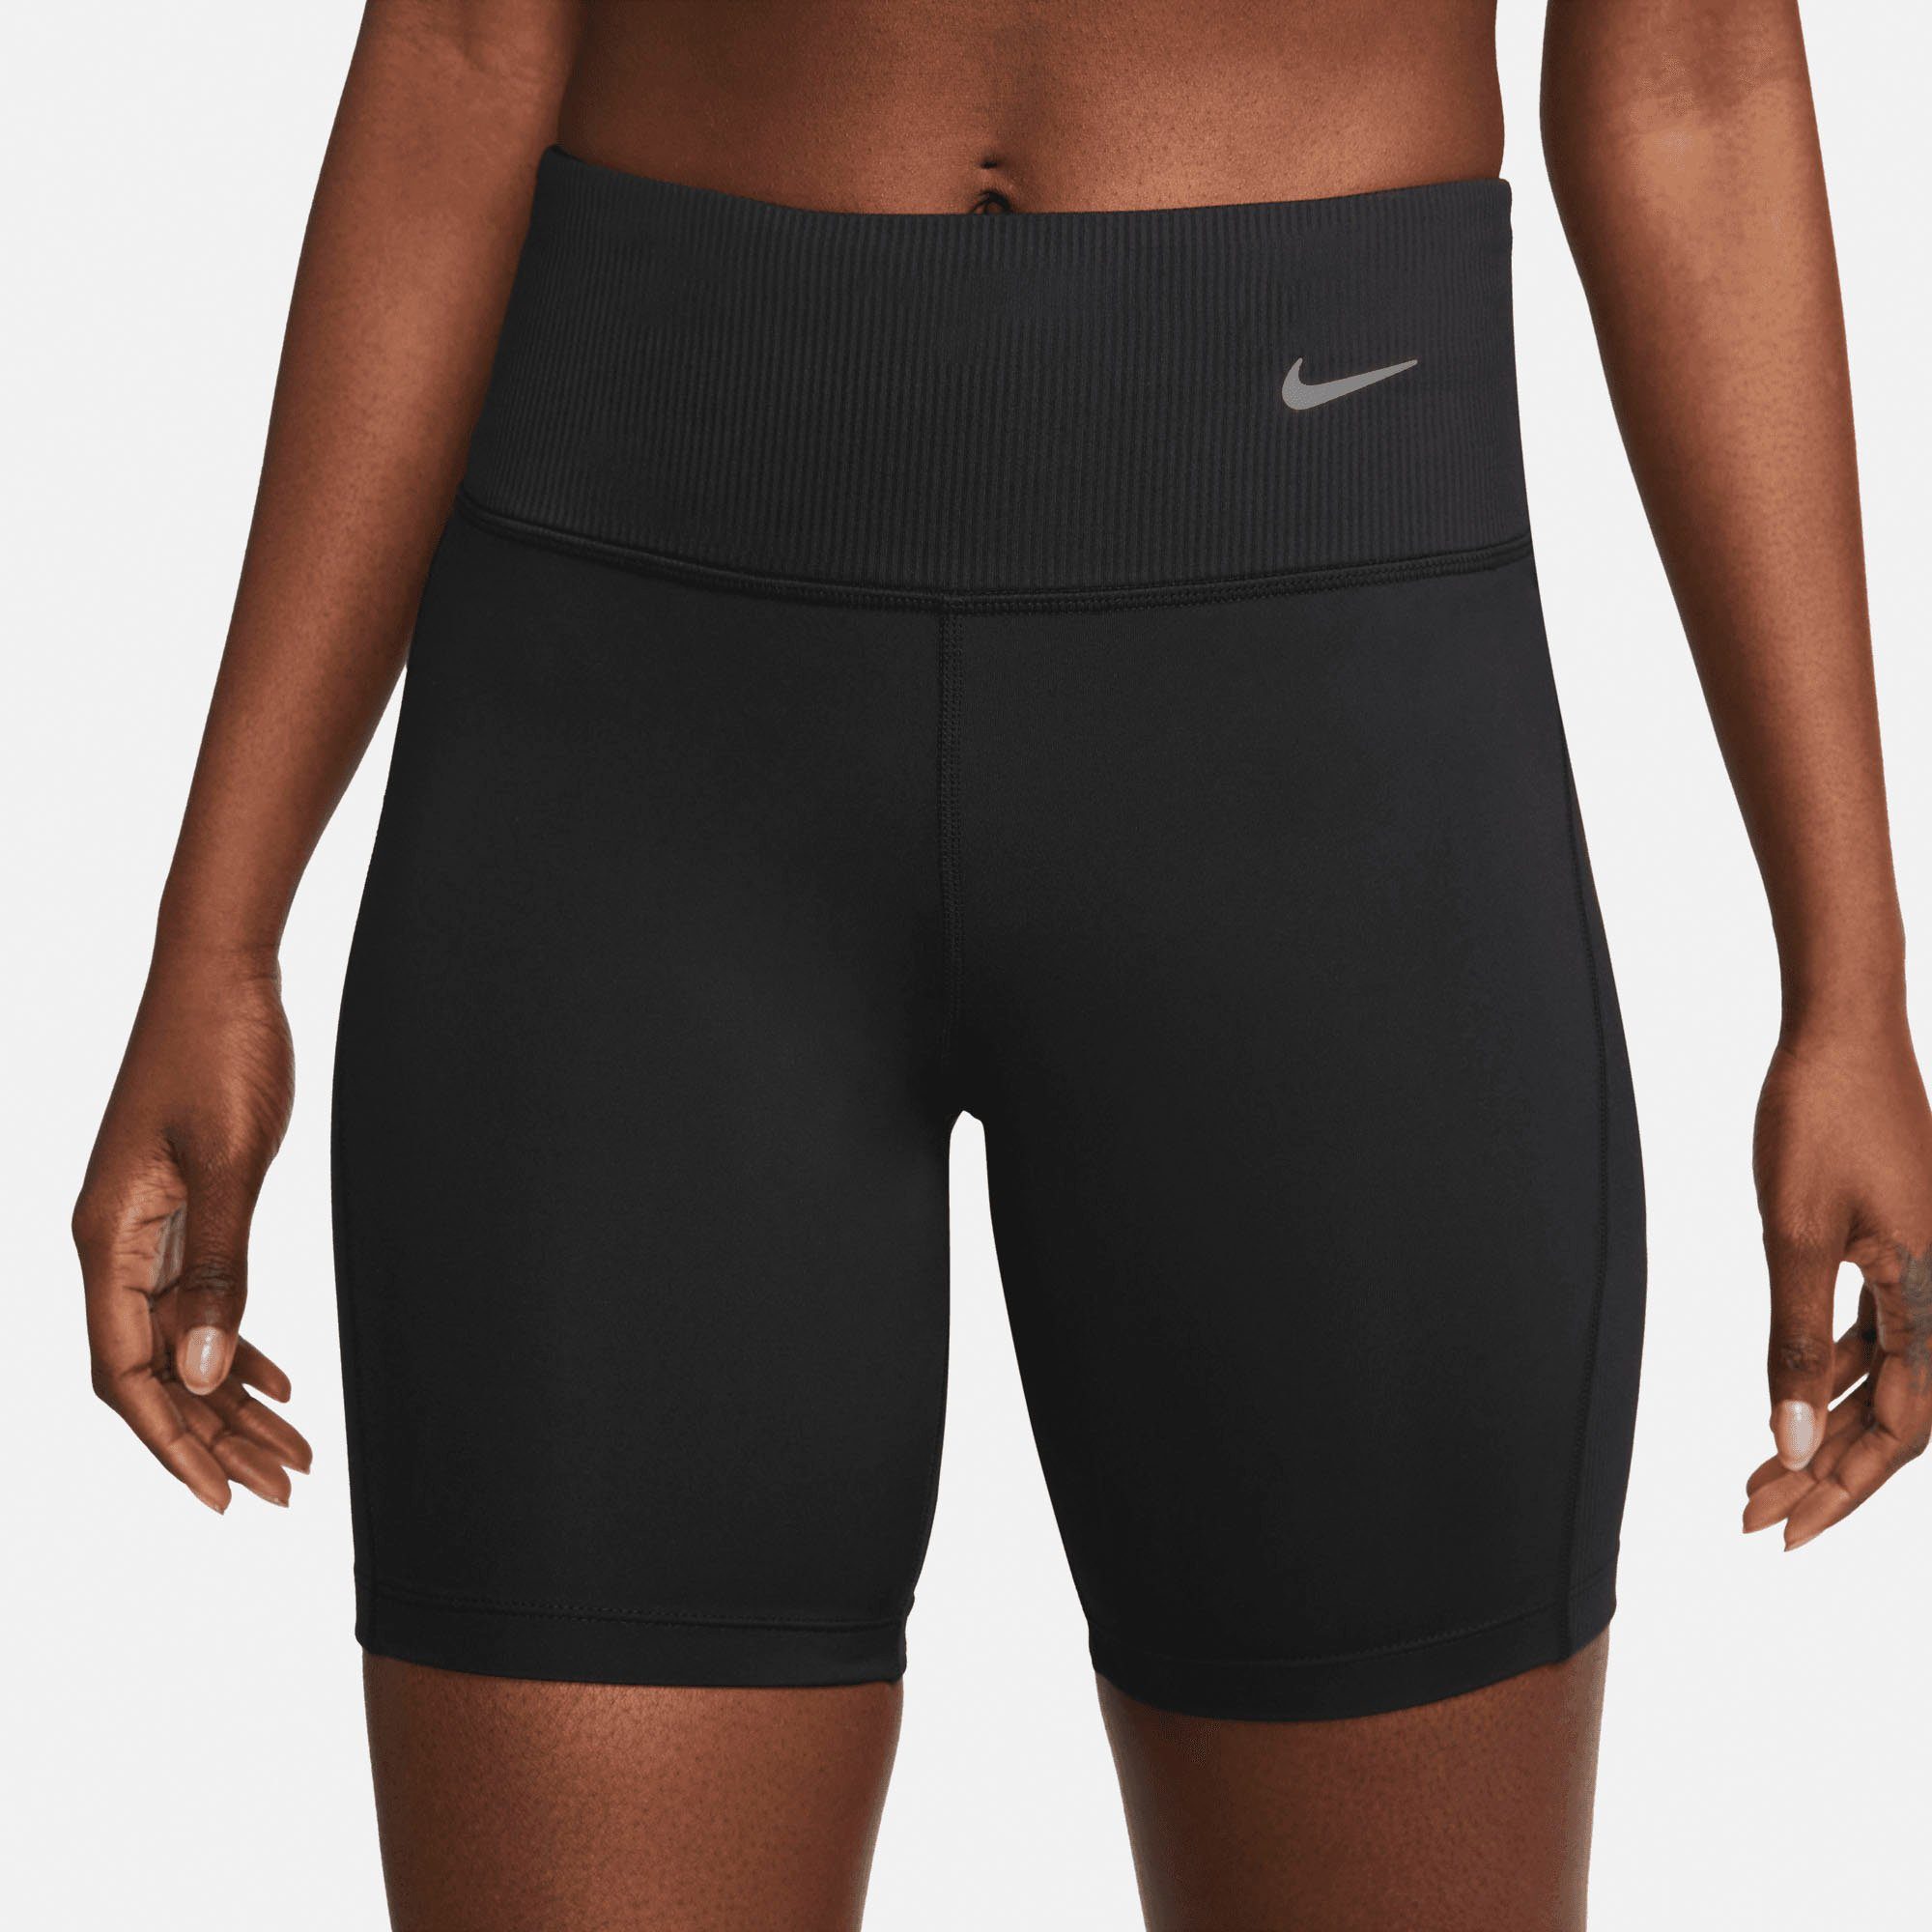 Nike Lauftights Dri-FIT Shorts schwarz Women's